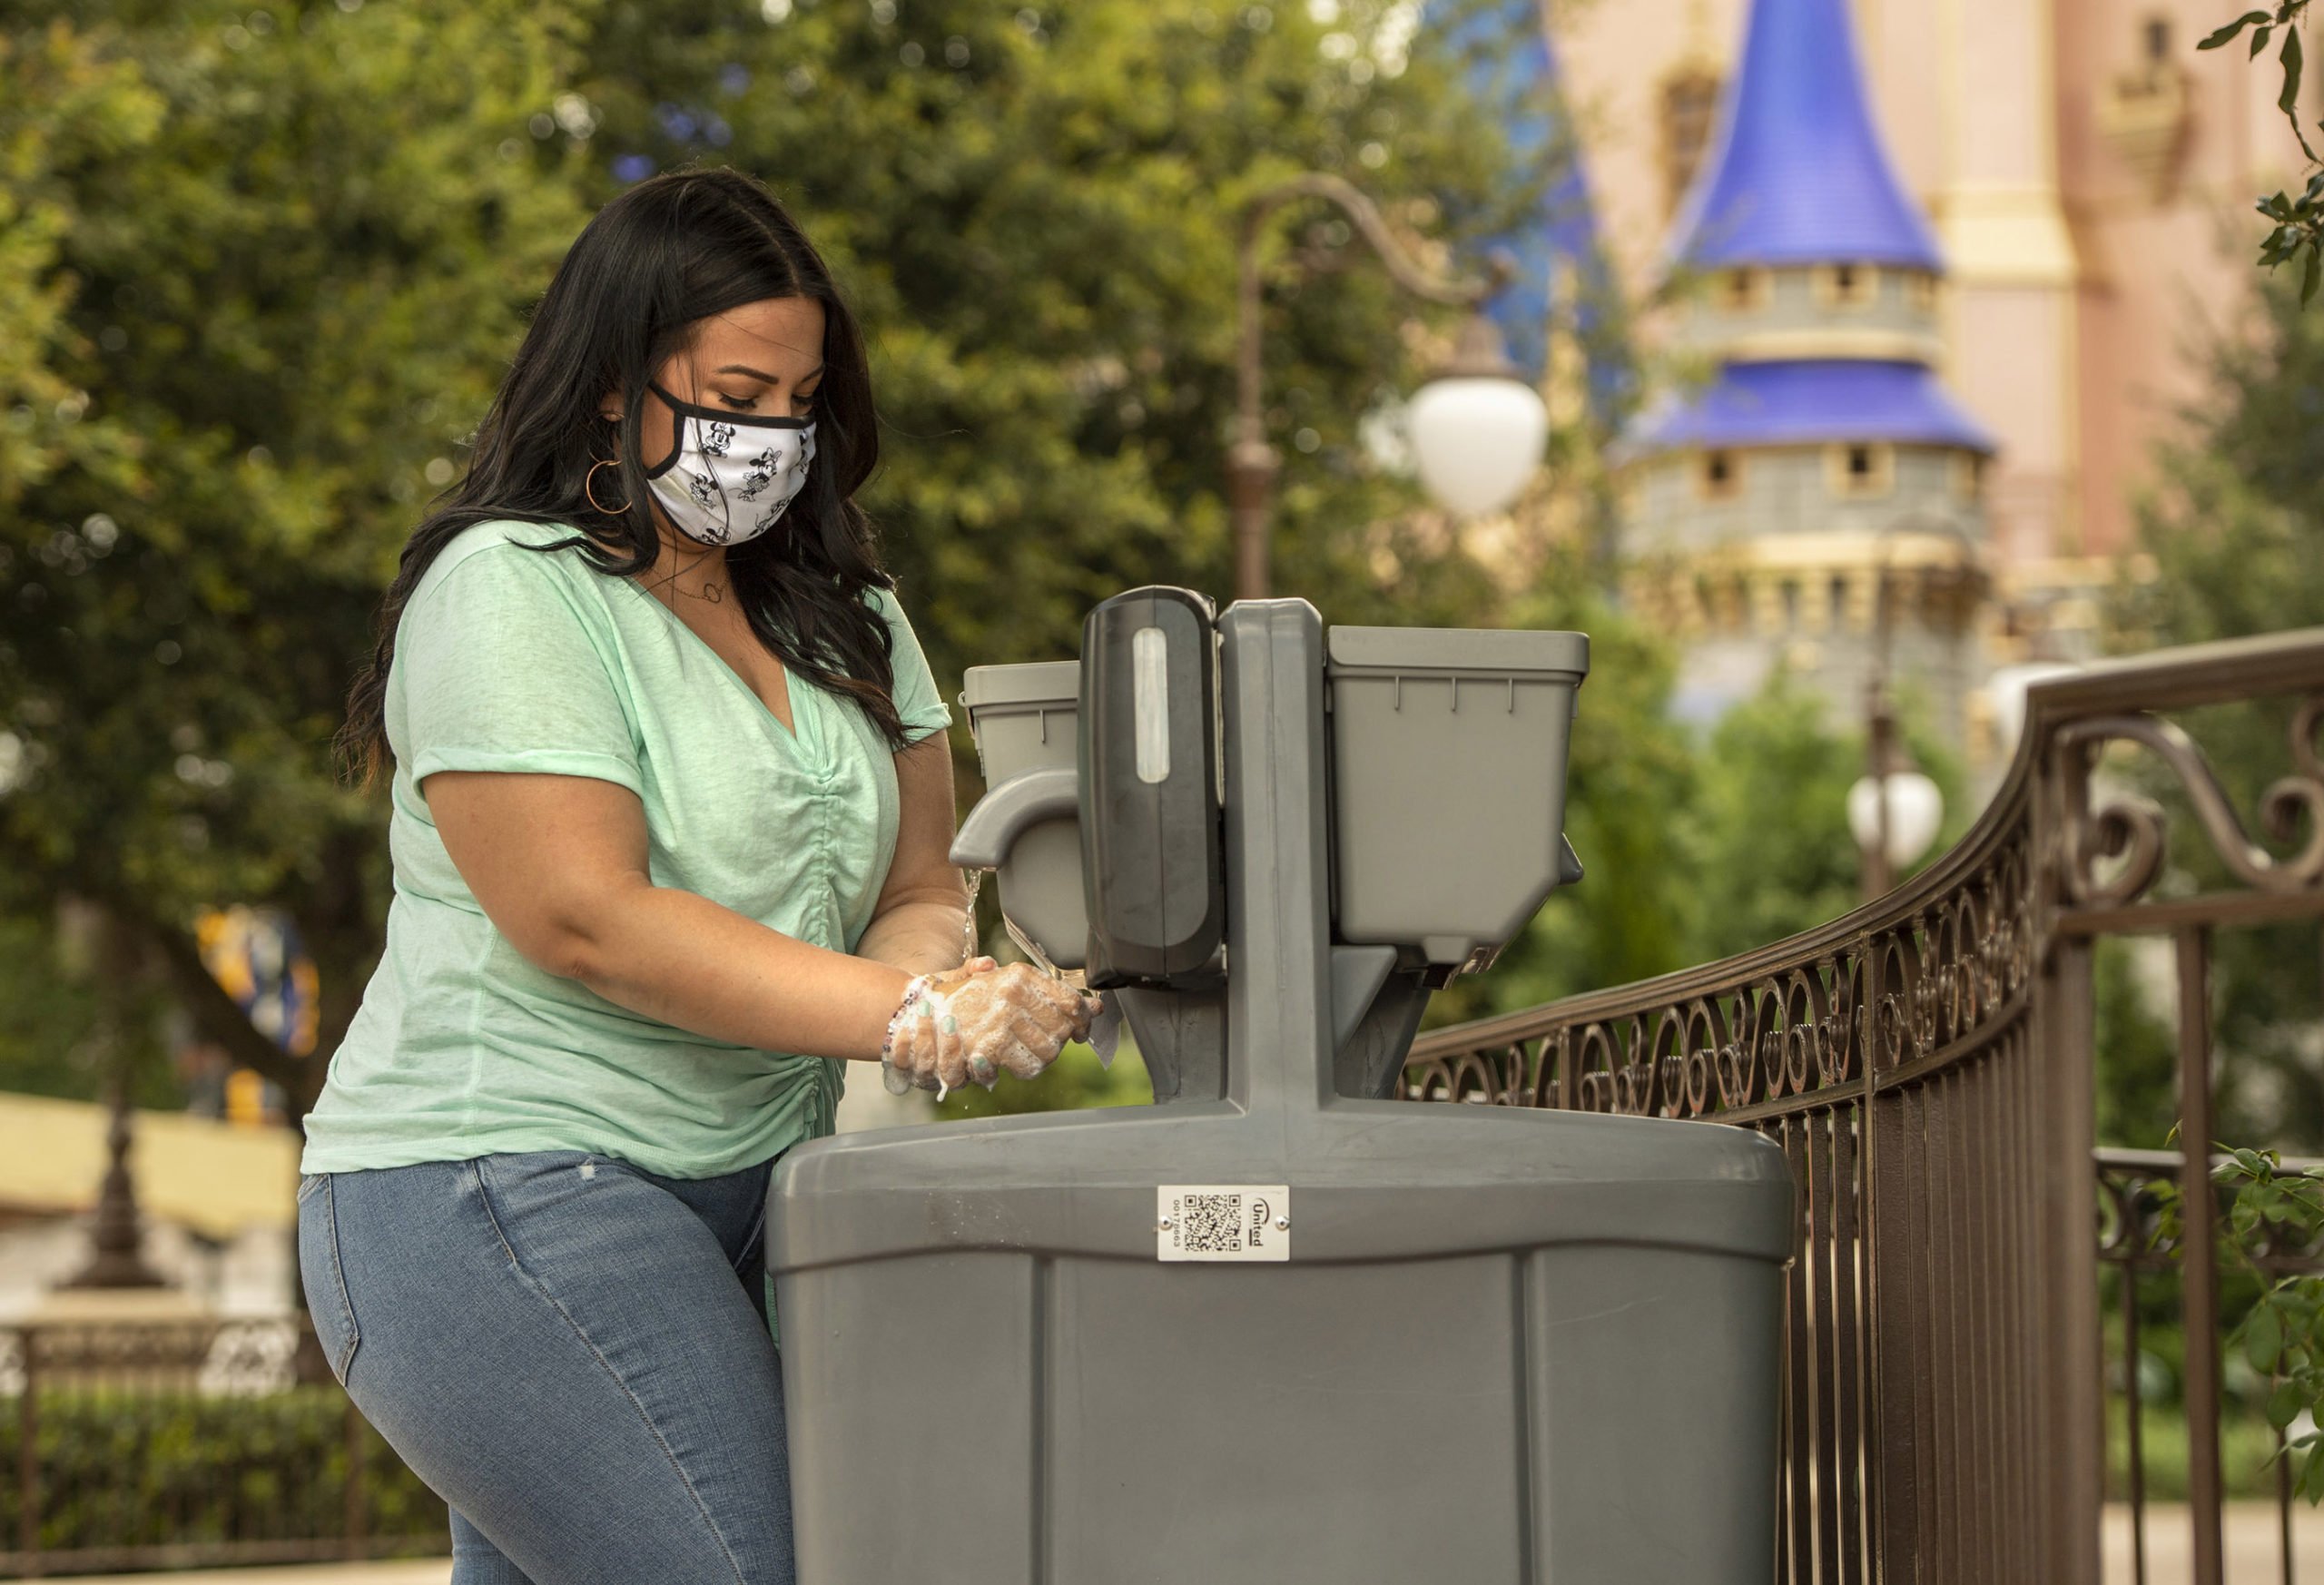 Hand washing station, Walt Disney World